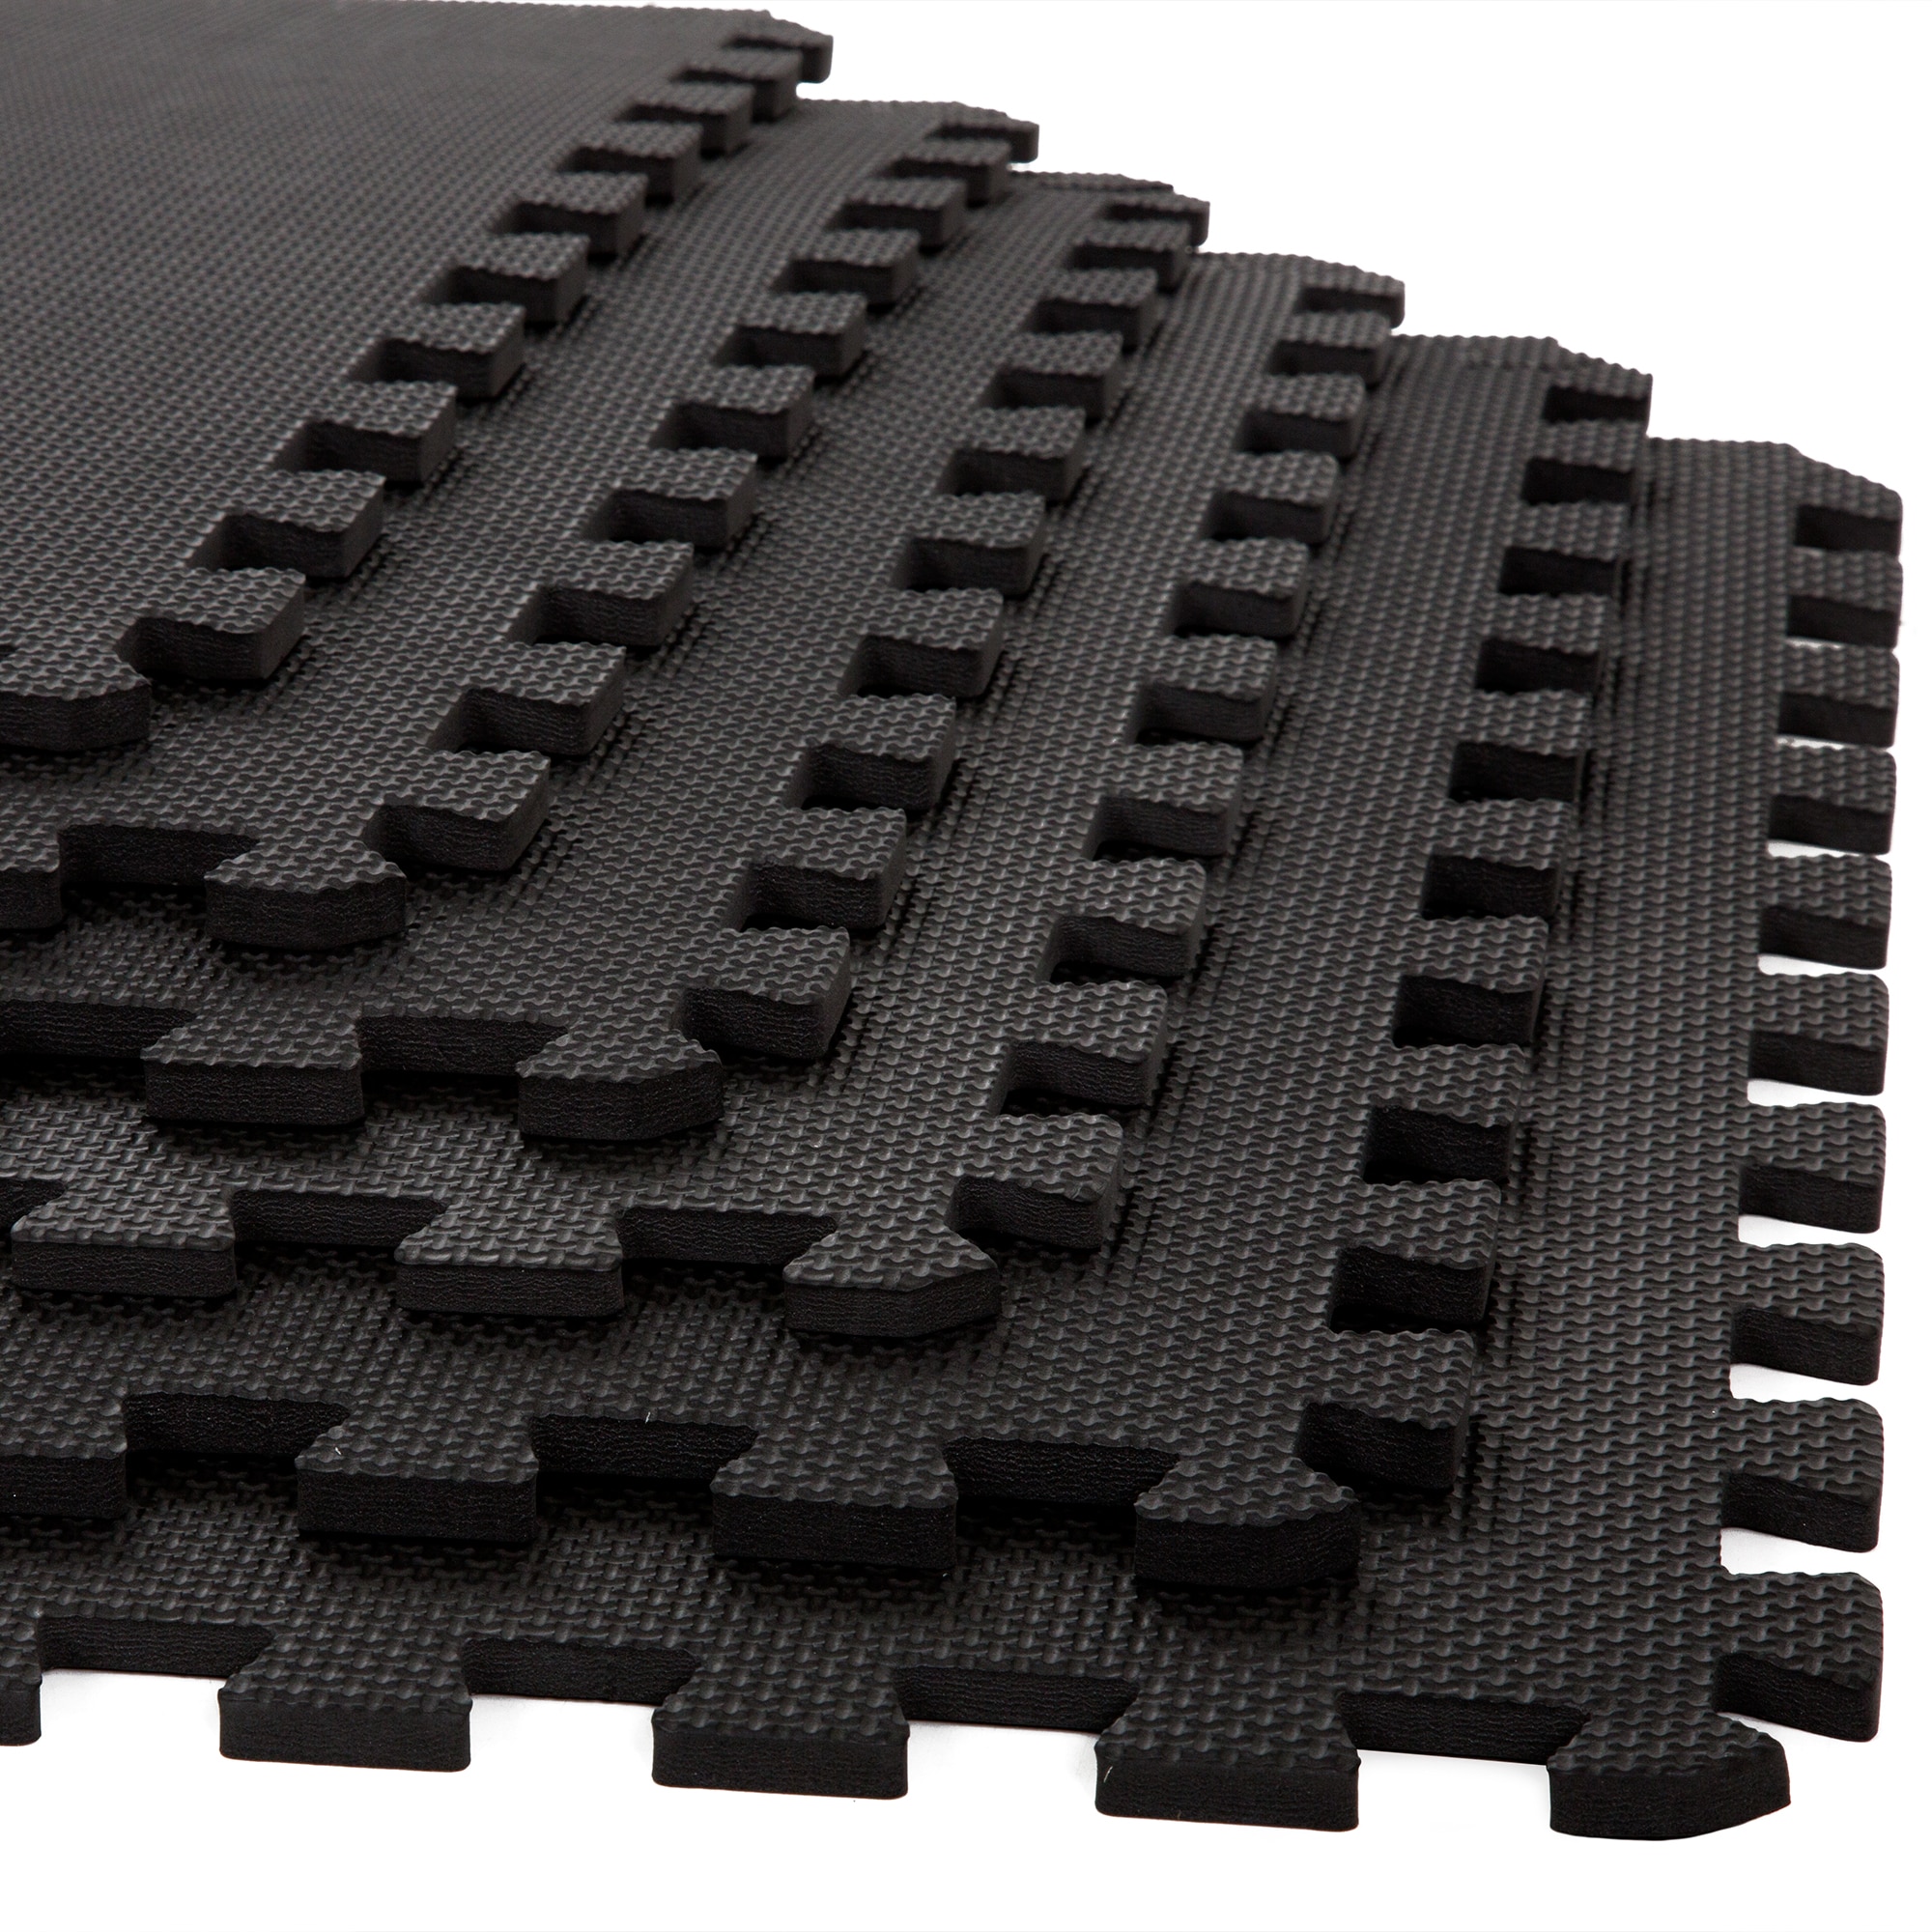 24 Sq Ft Interlocking Puzzle Rubber Foam Gym Fitness Exercise Tile Floor Mat Xi 